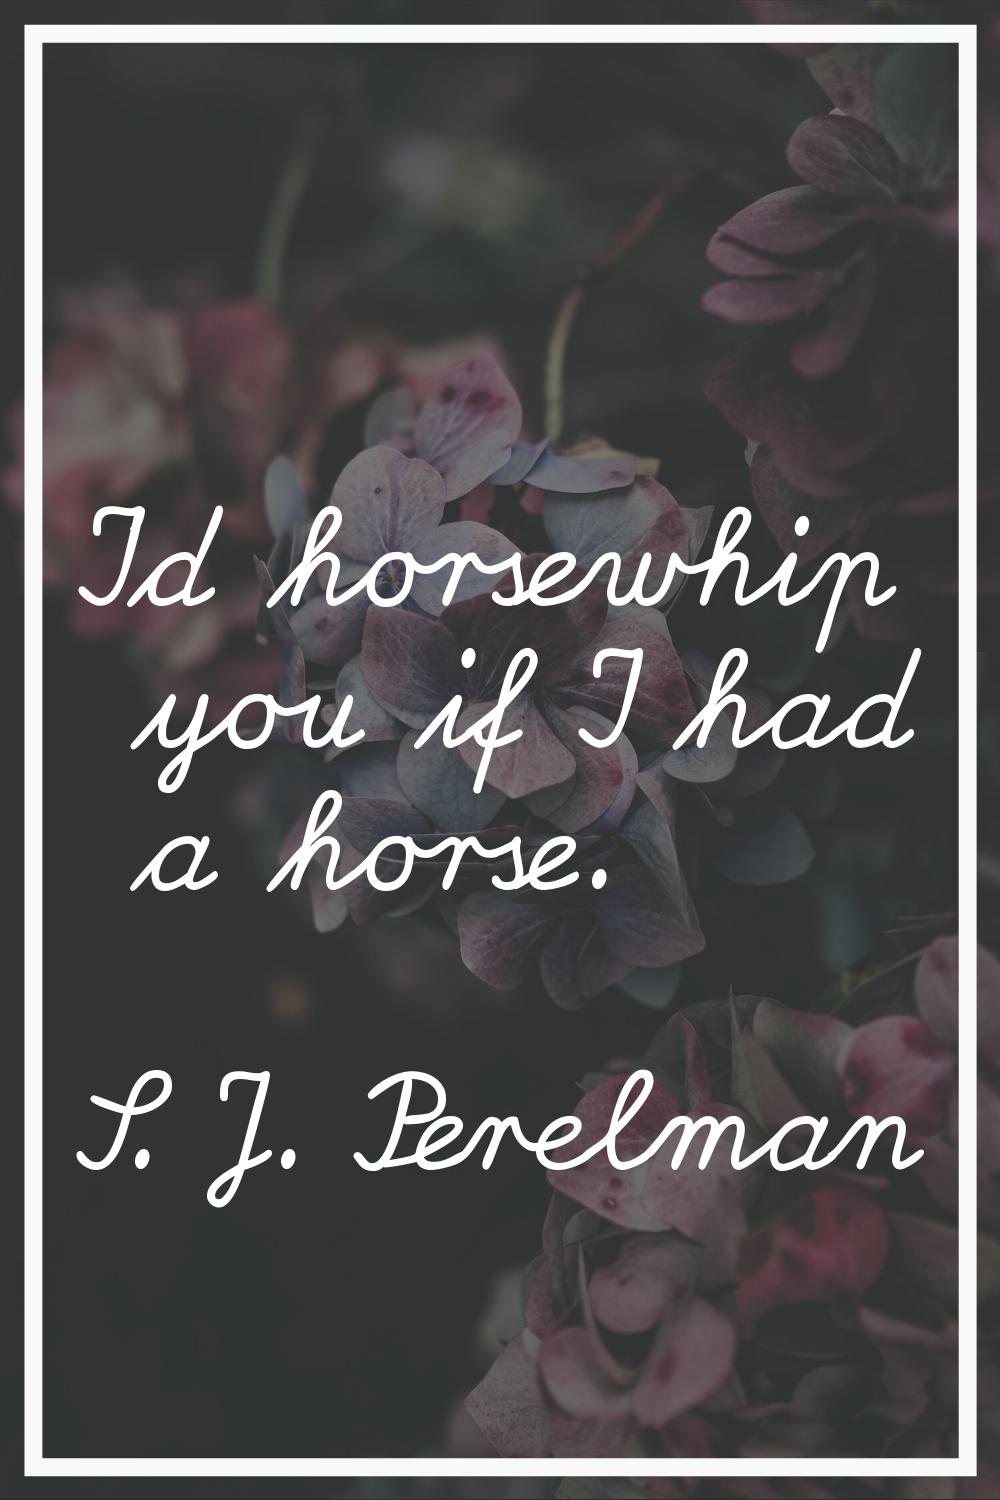 I'd horsewhip you if I had a horse.